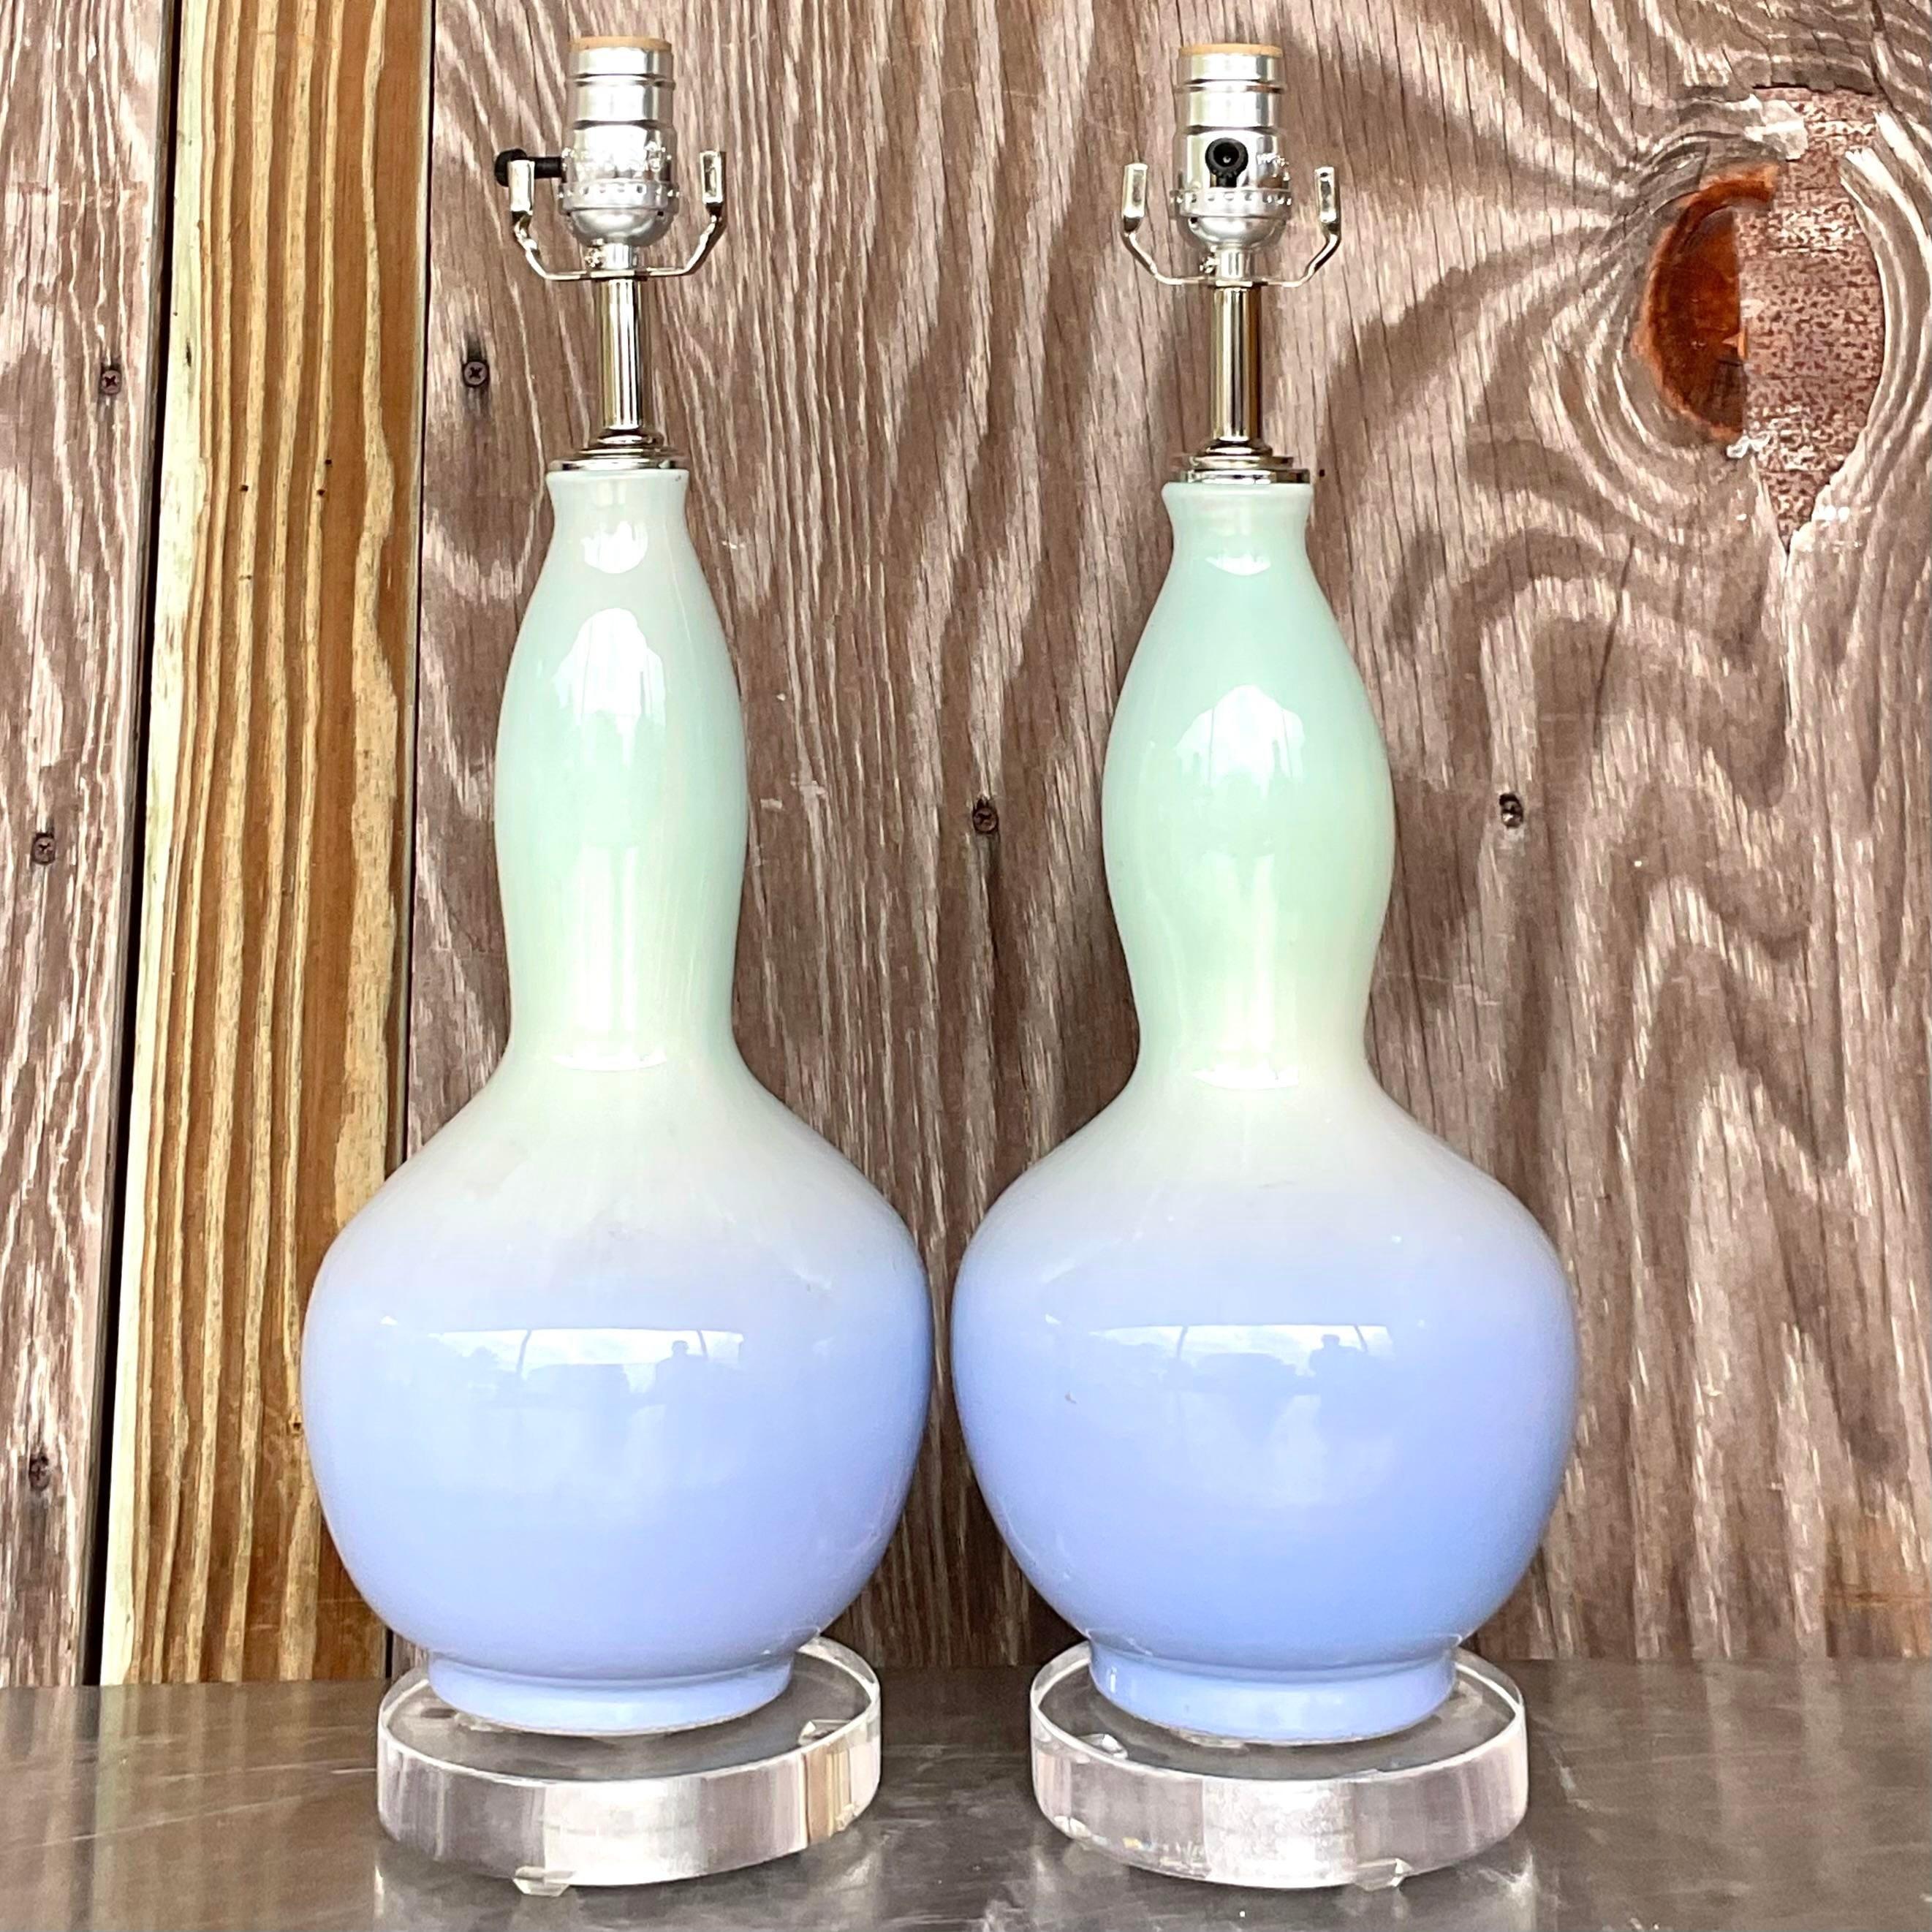 Vintage Regency Ombre-Glaslampen im Regency-Stil - ein Paar (amerikanisch) im Angebot